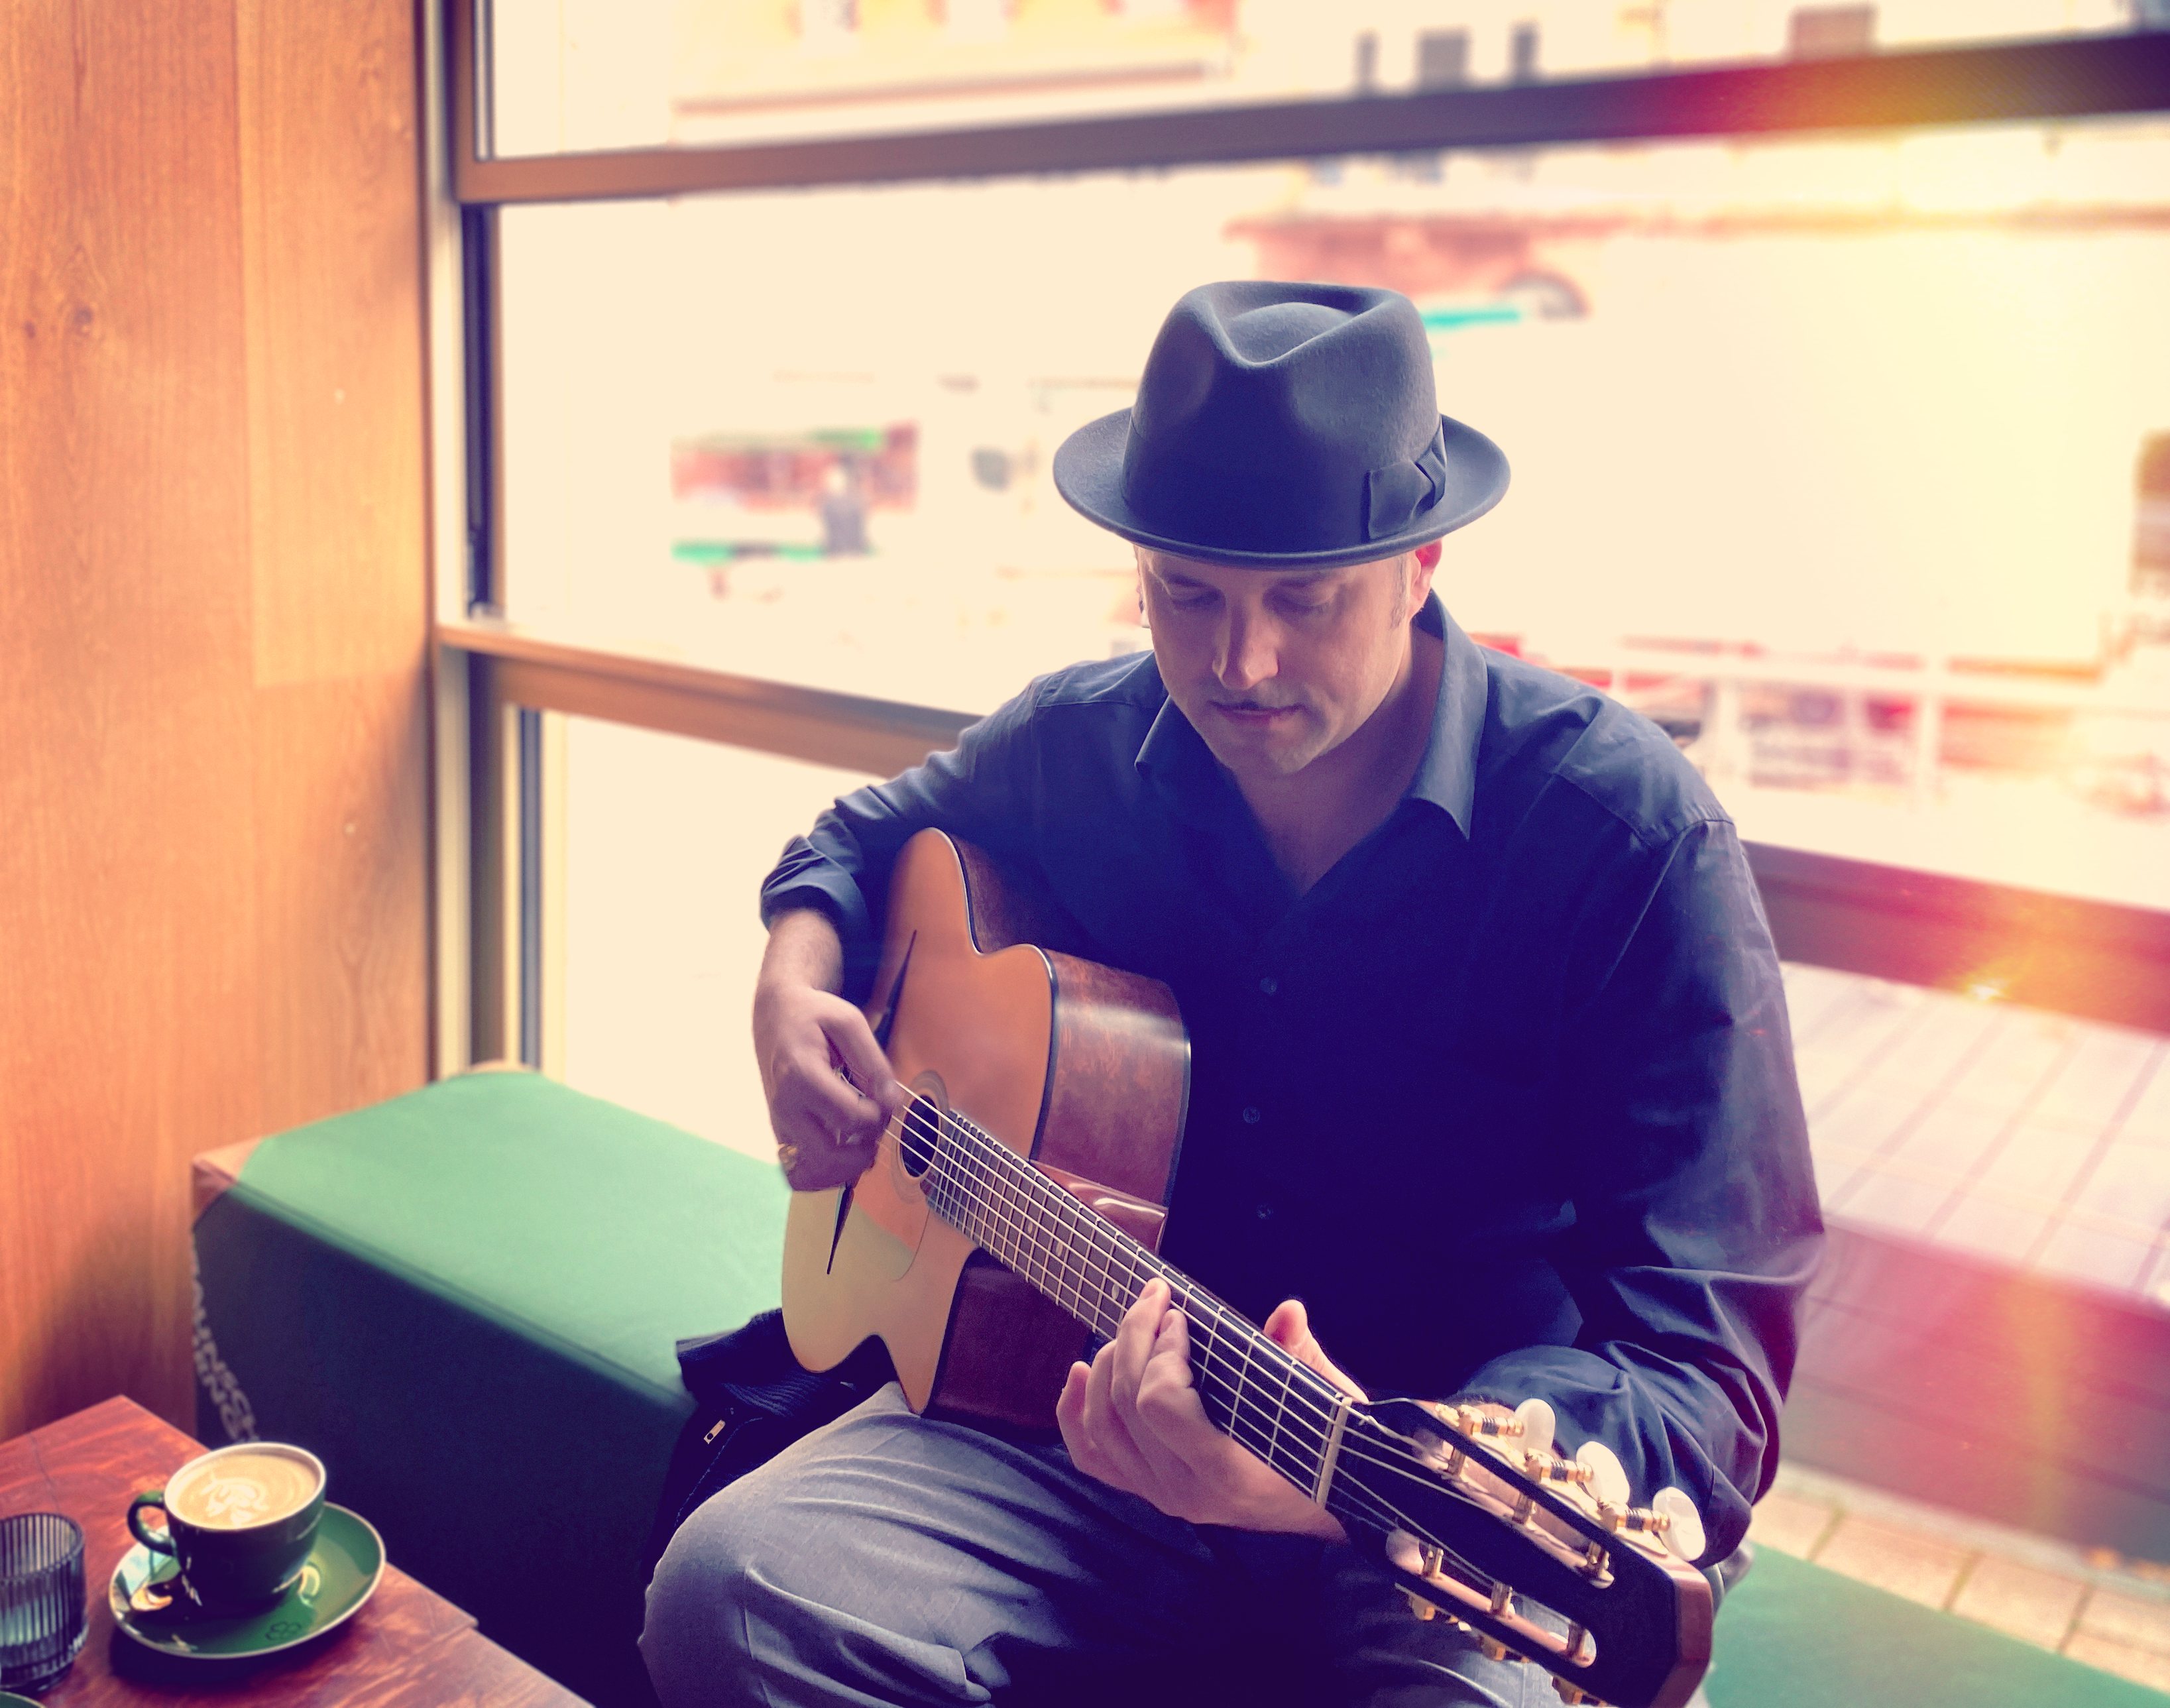 Sebastian Rudolfo Christ plays guitar in a coffee shop.